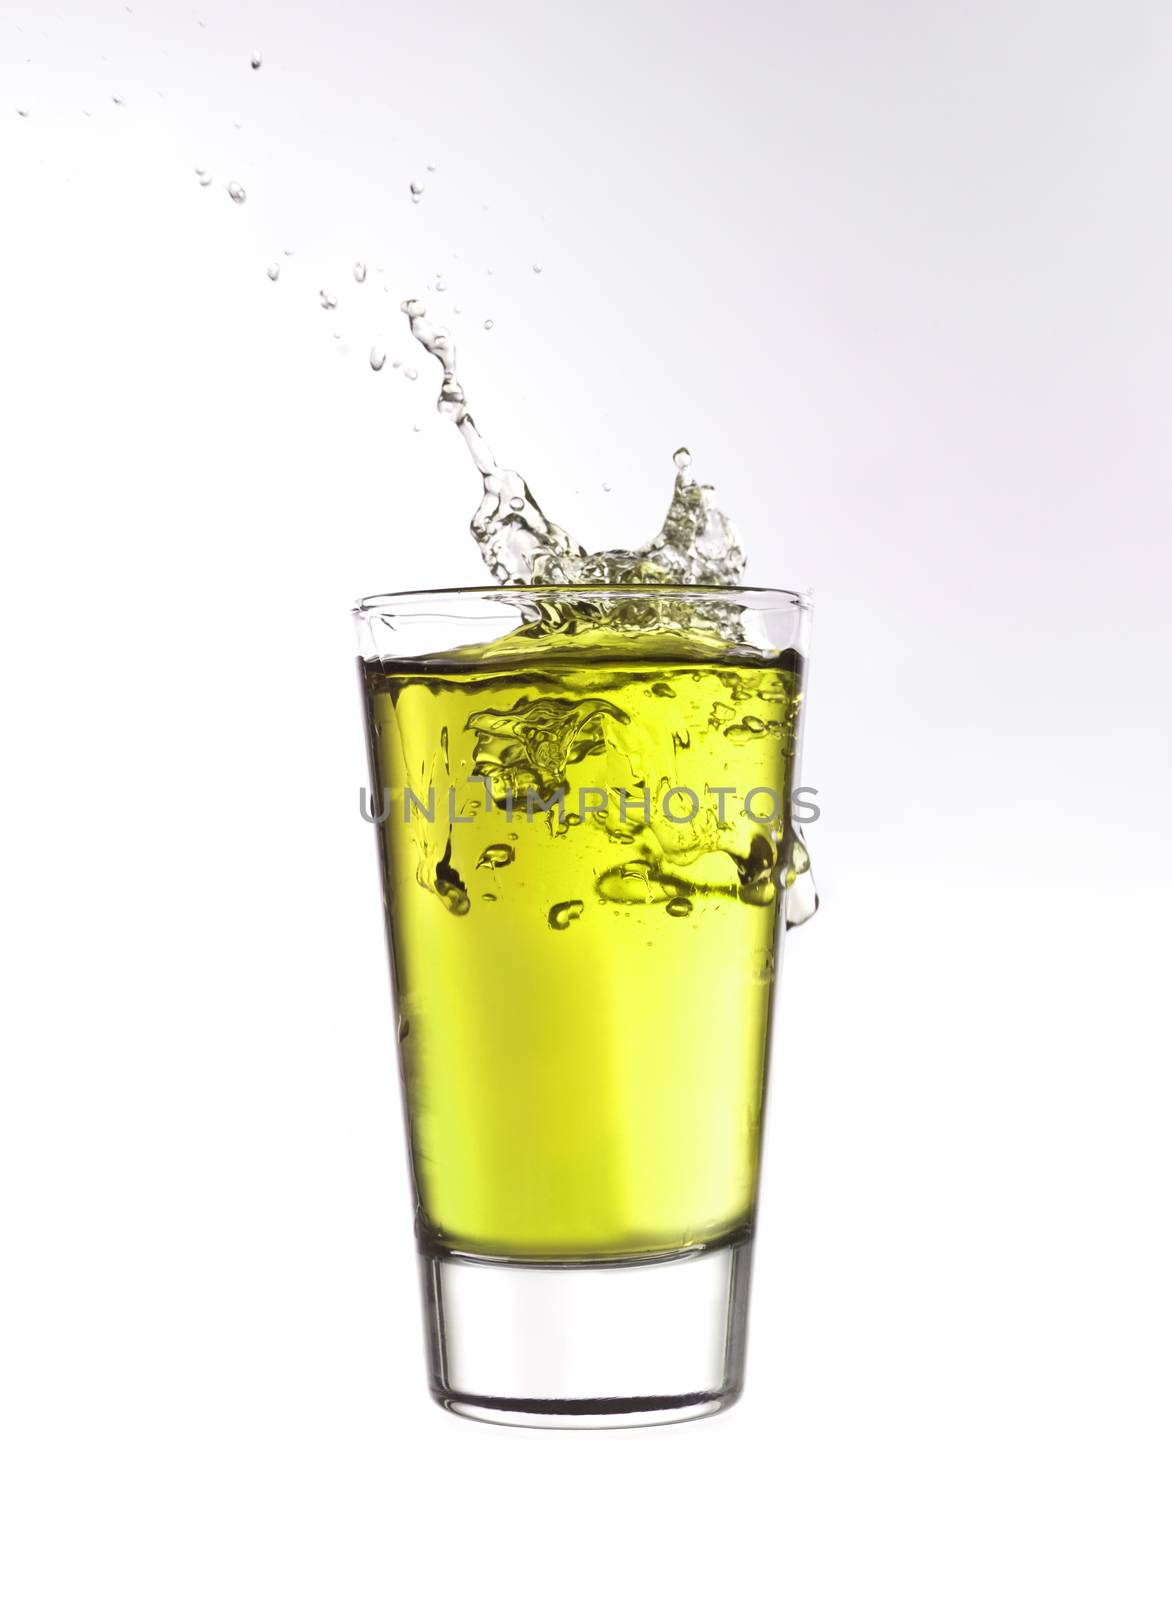 Splash in a glass of yellow lemonade by gemenacom